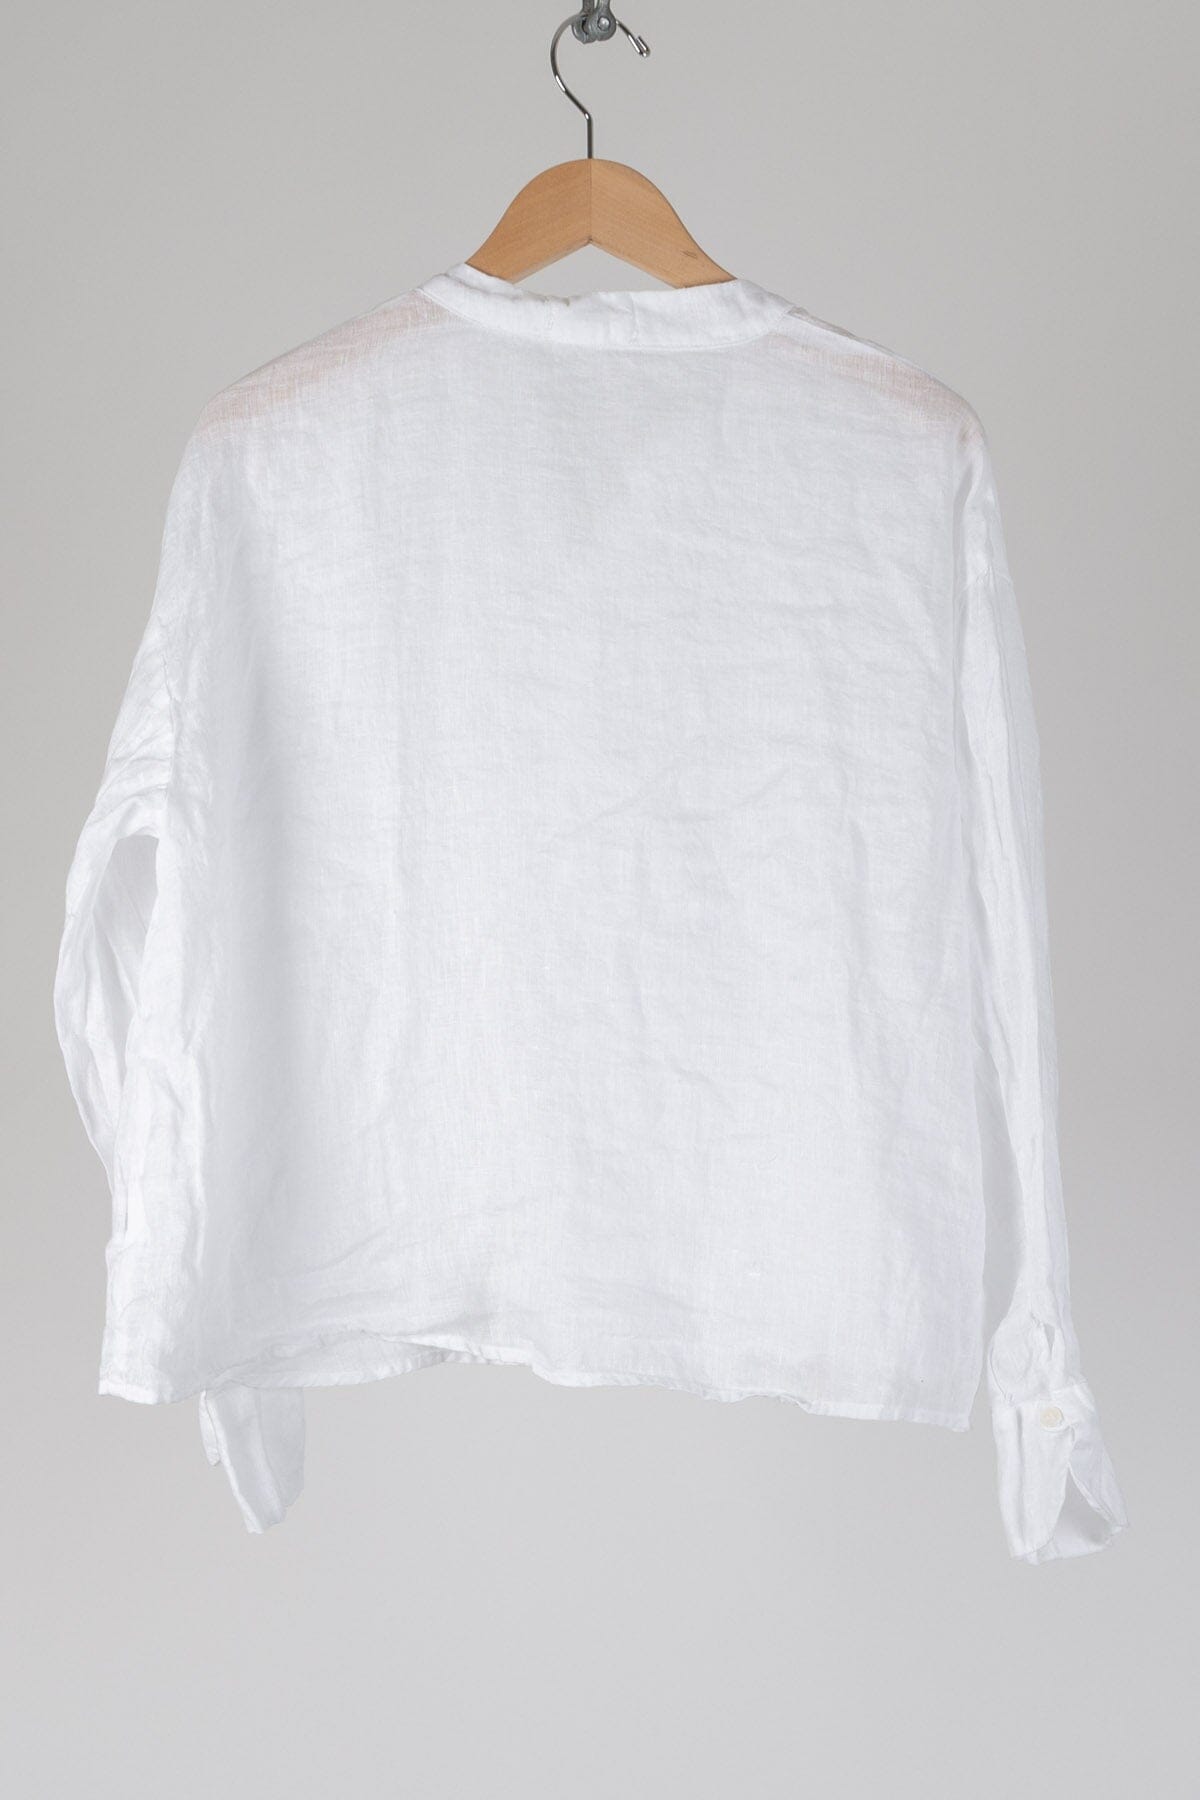 Ariana - Linen S10 - Linen Shirt/Top/Tunic CP Shades 